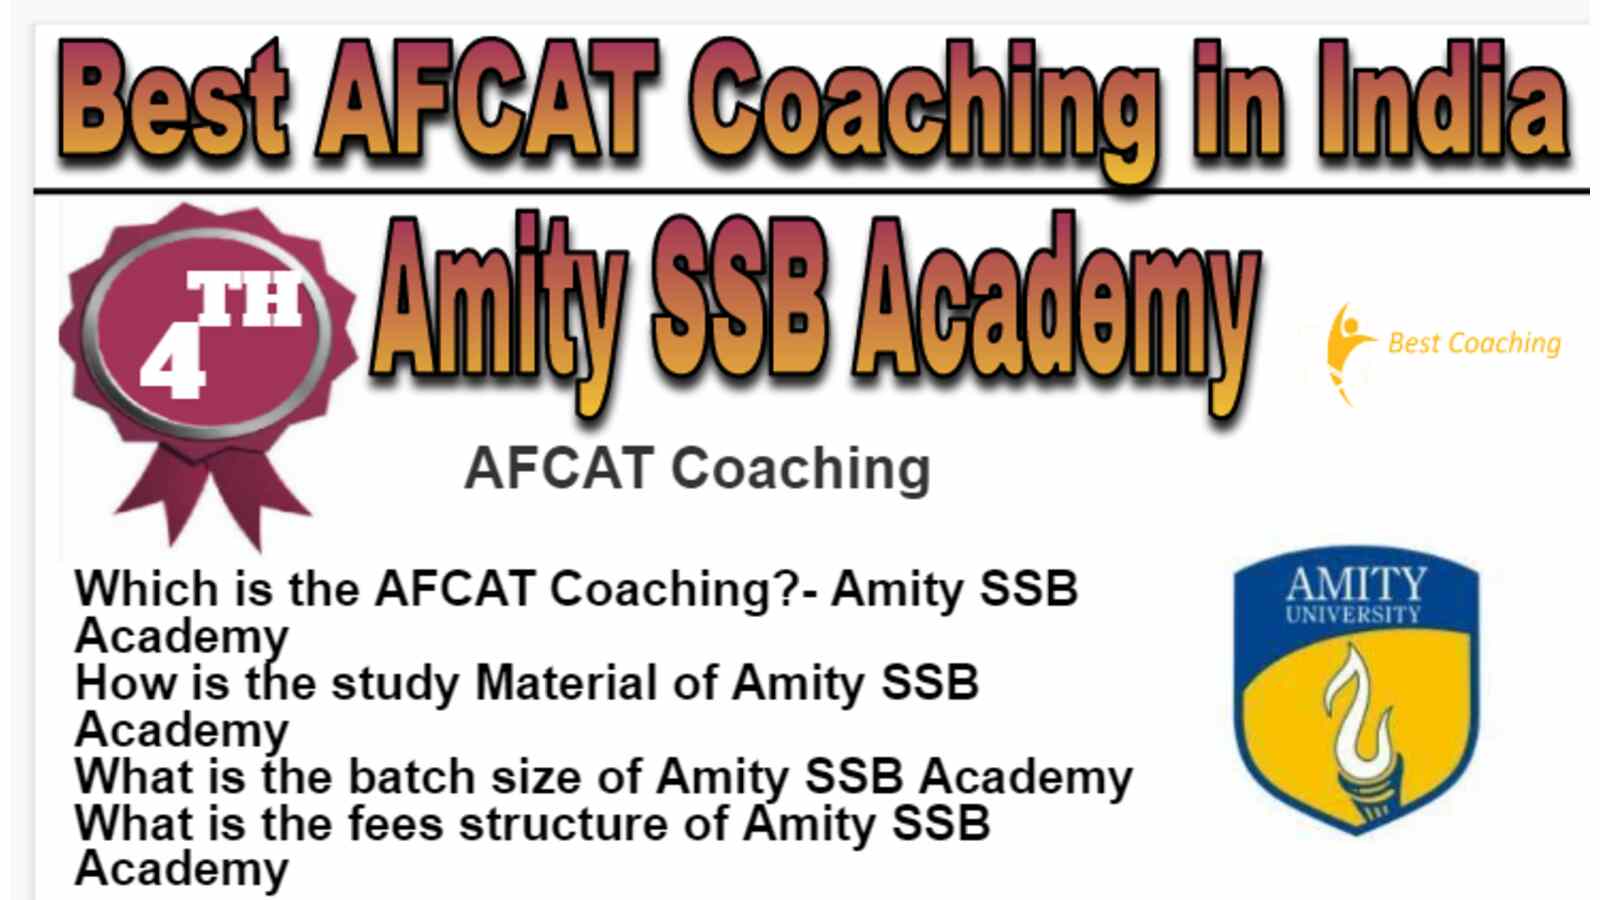 Rank 4 Best AFCAT Coaching in India